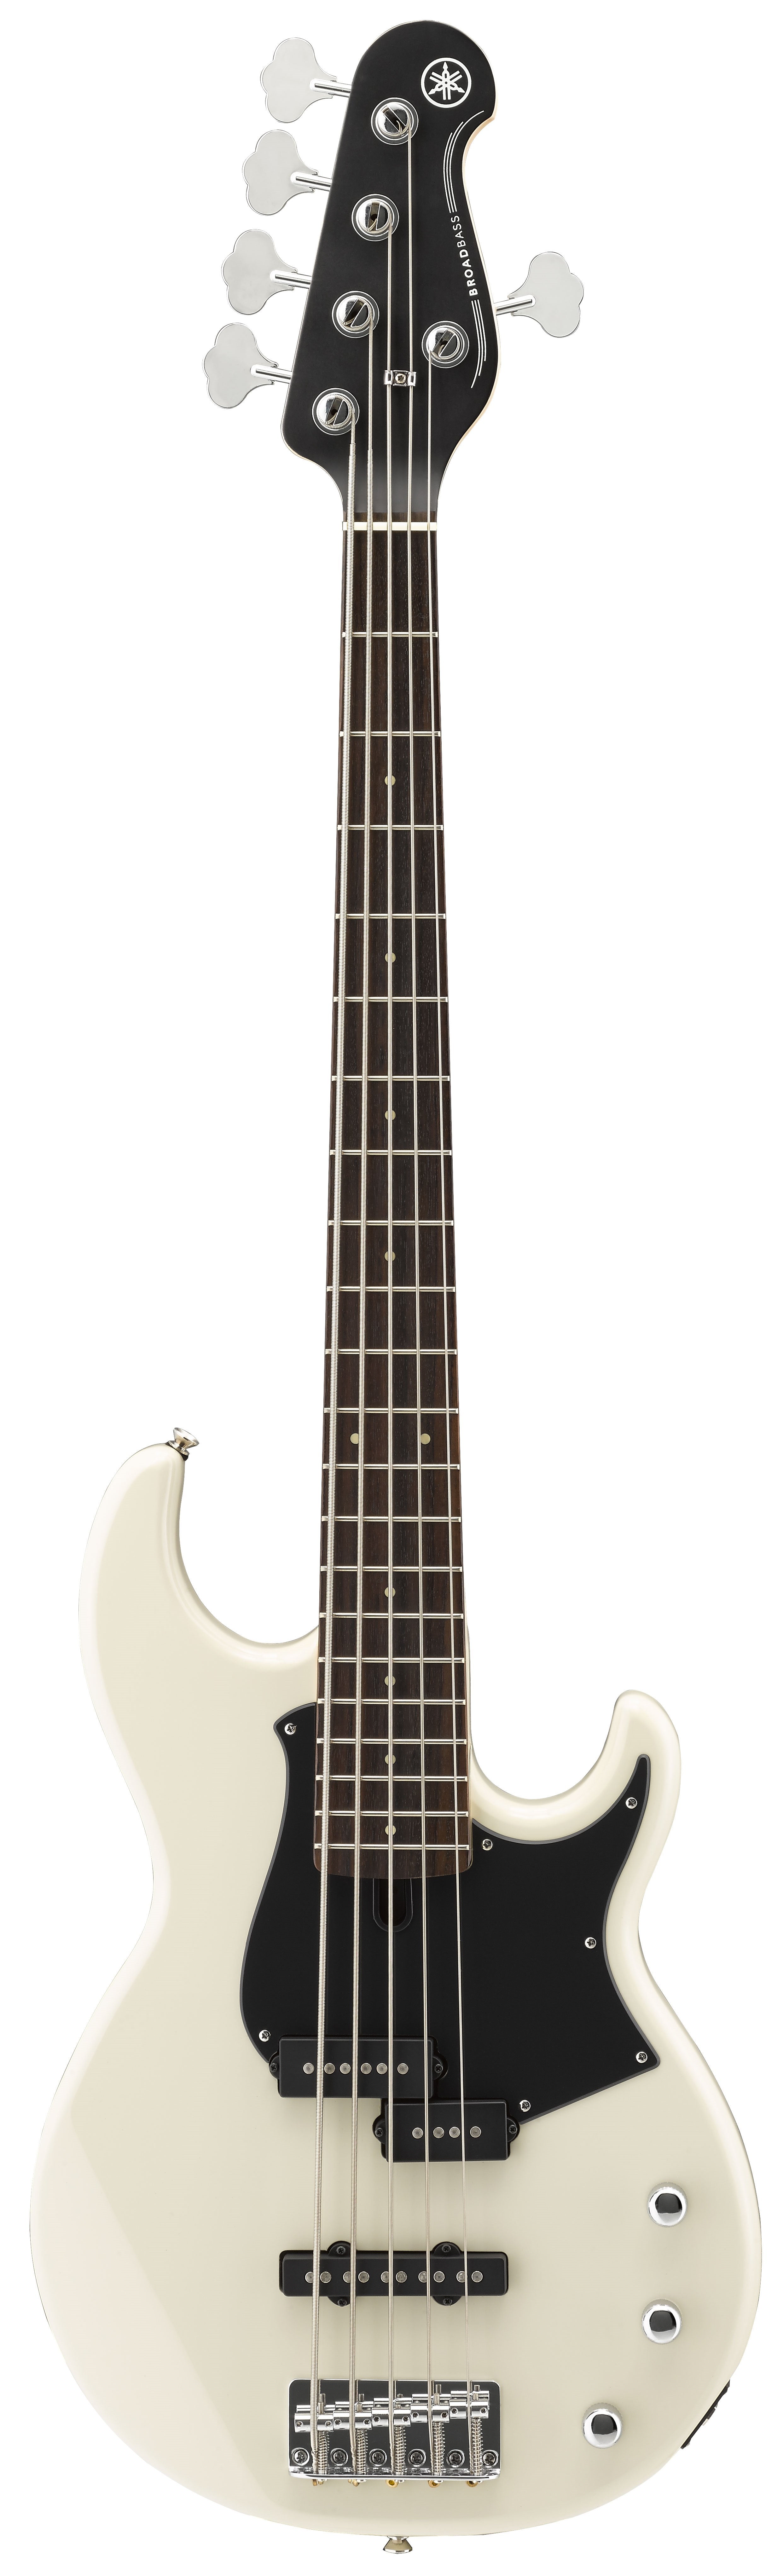 Yamaha BB235 Bass Guitar - Vintage White